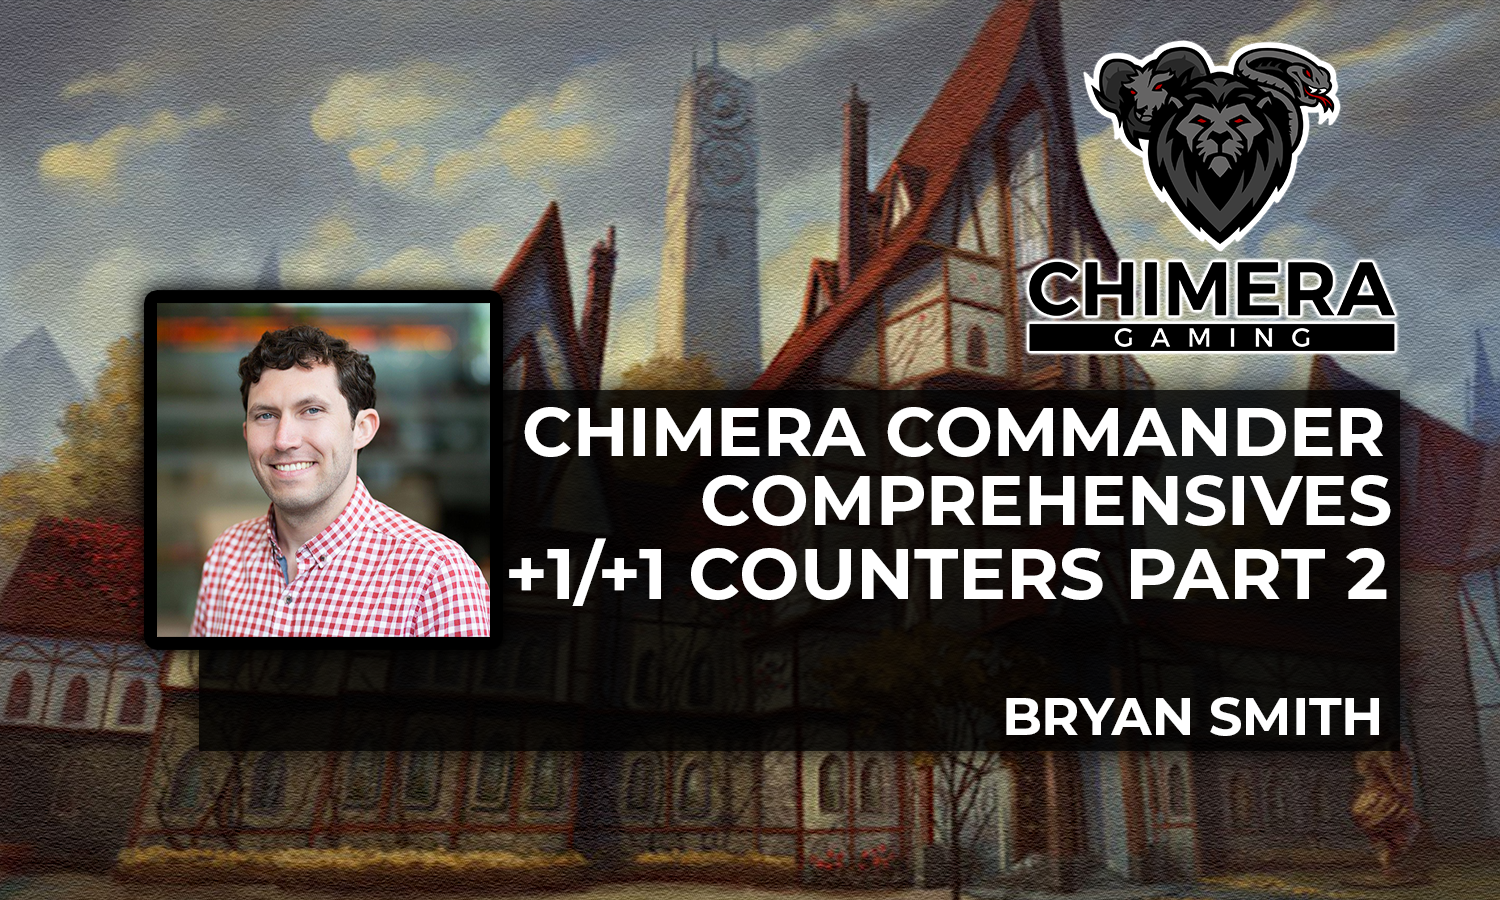 Chimera Commander Comprehensives: +1/+1 Counters Part 2